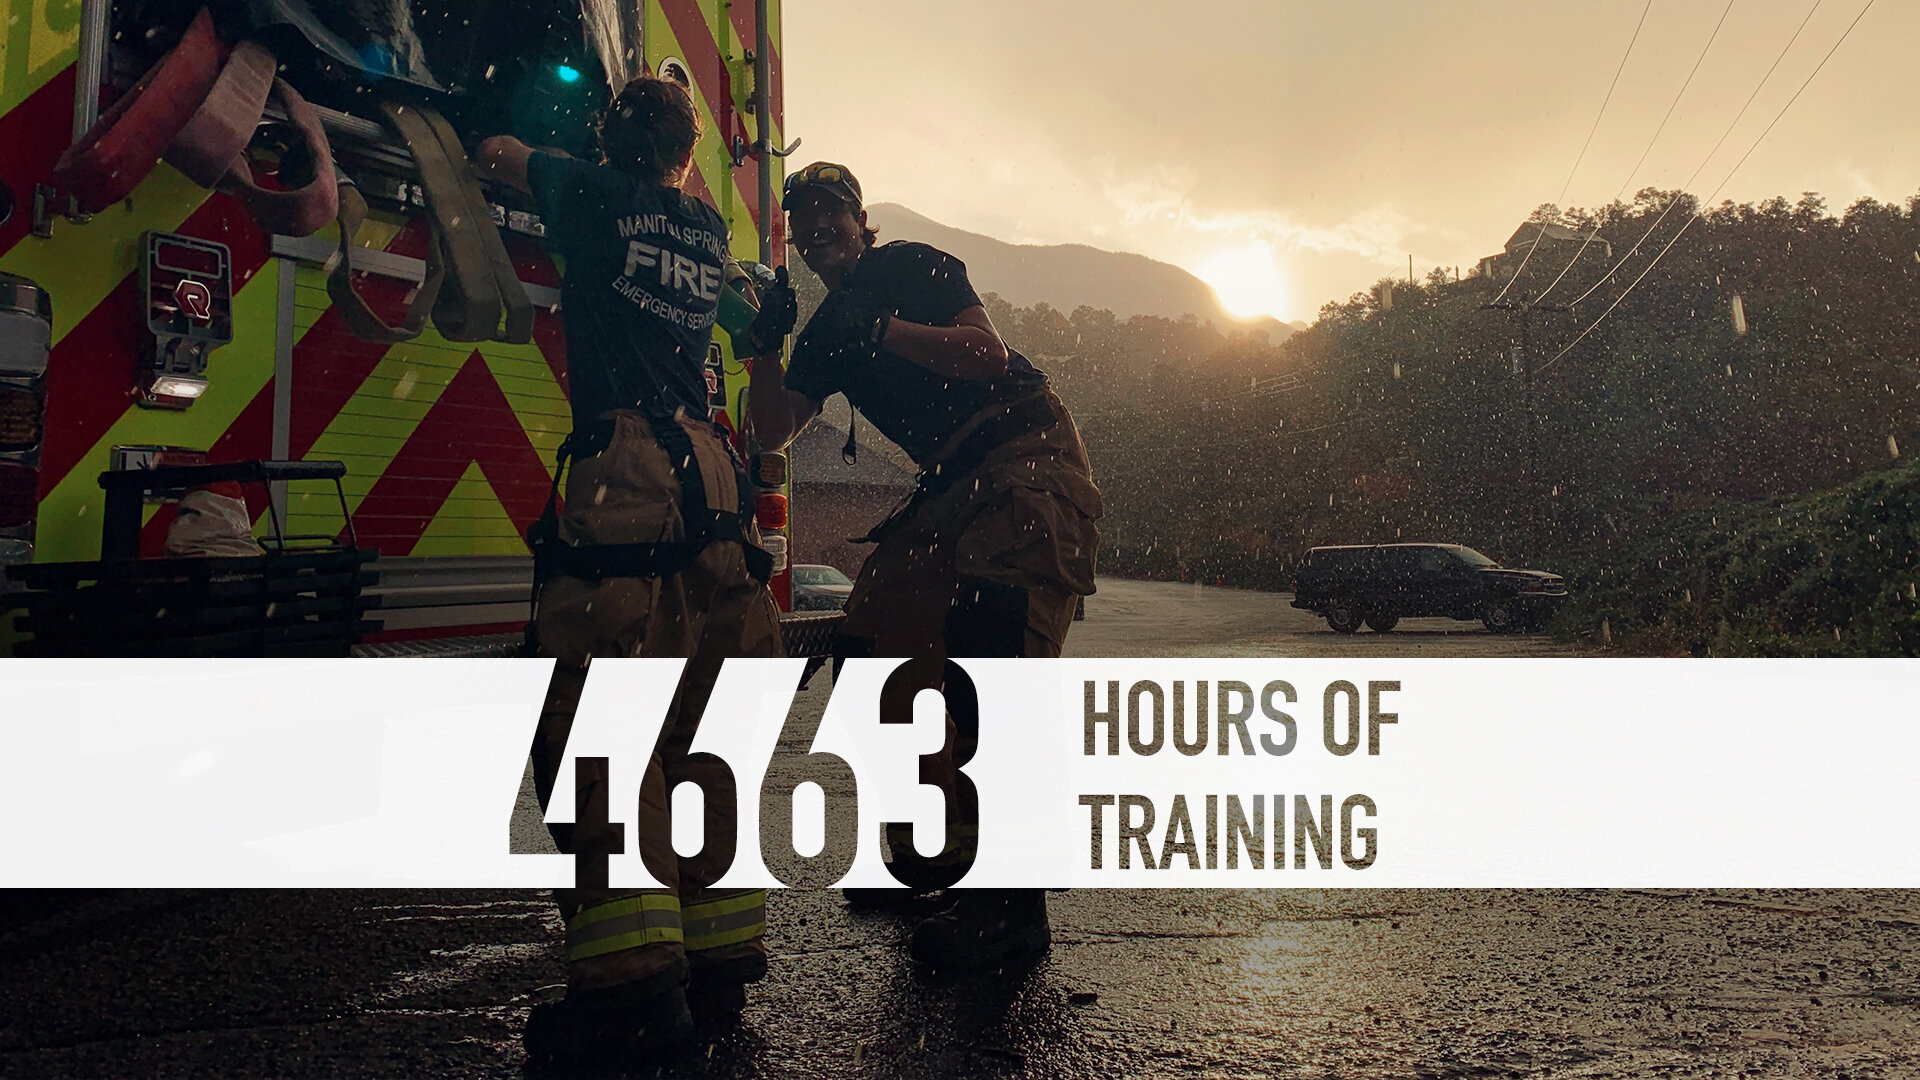 2019 Annual Report - 2 Training Hours.jpg